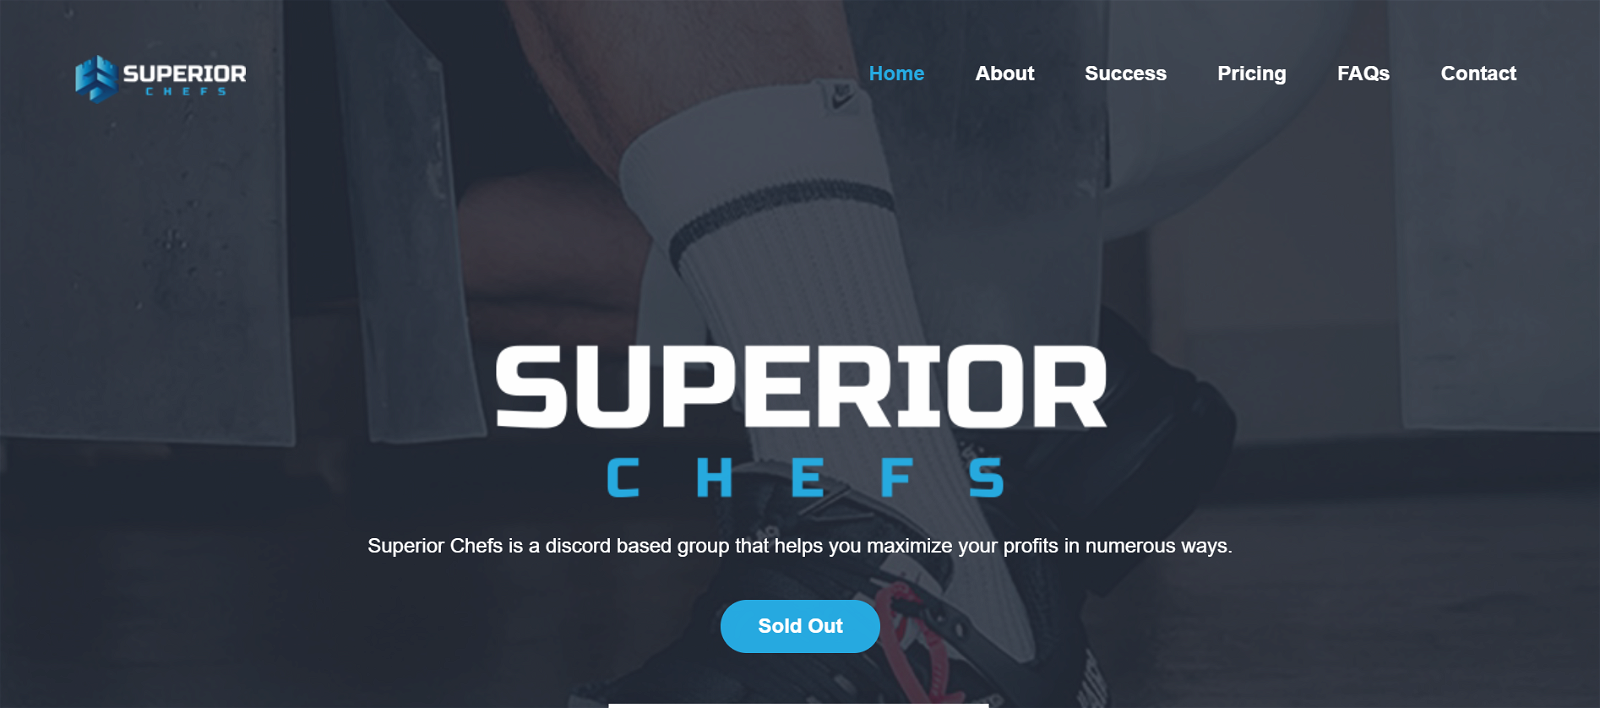 Superior Chefs cook group presentation banner